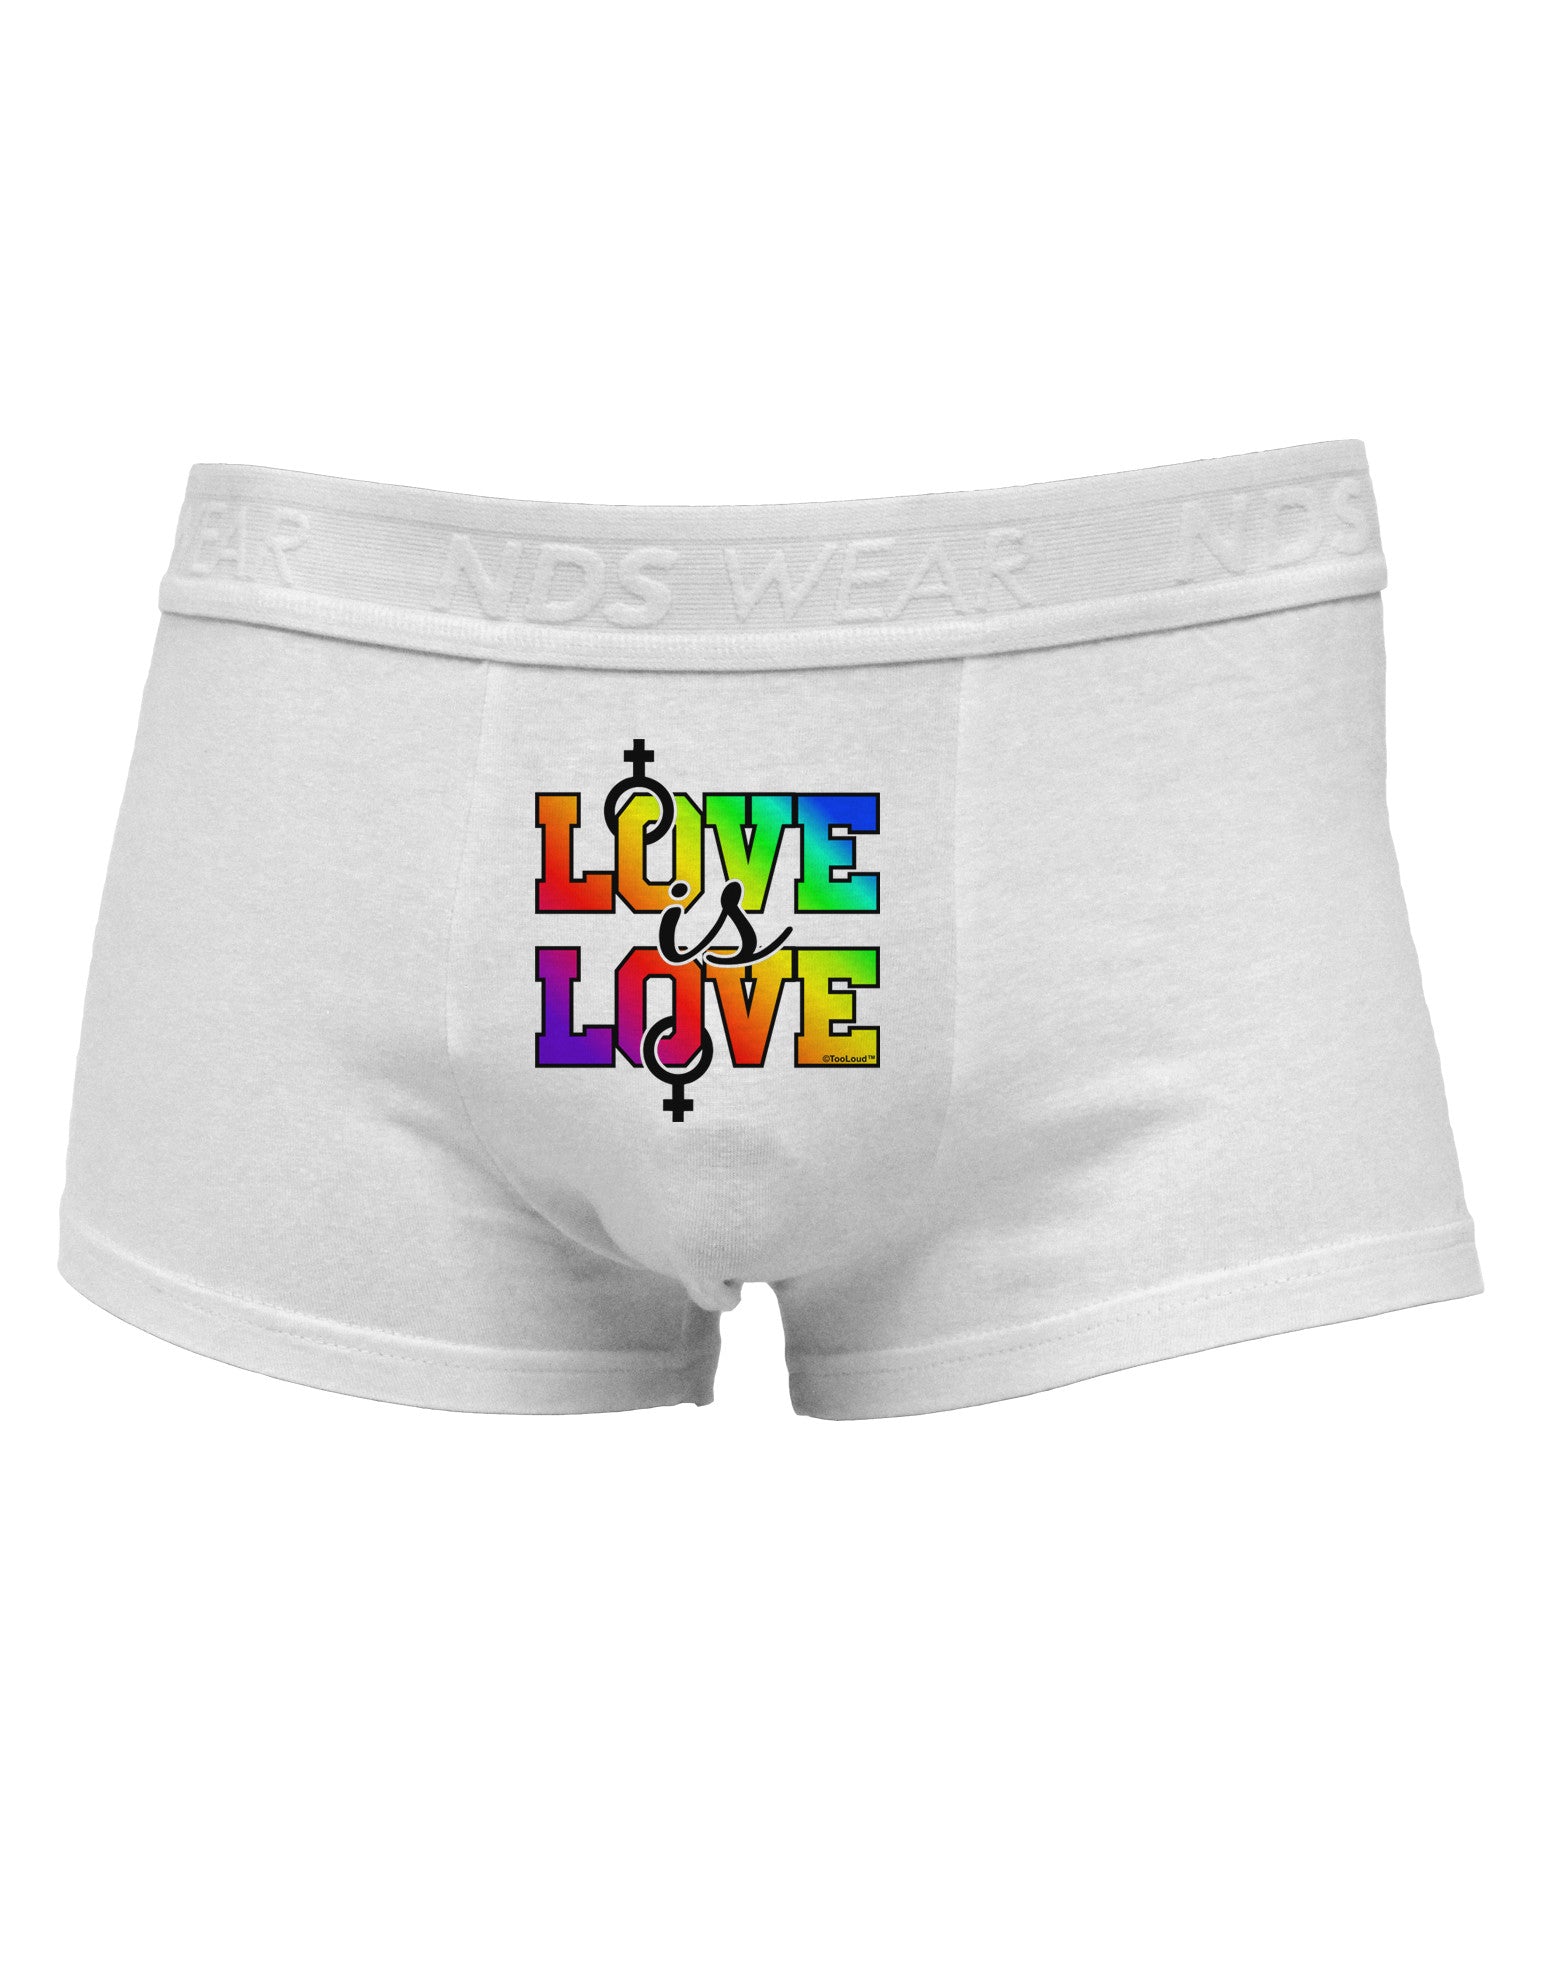 Custom Gay Underwear, Personalized Gay Photo Boxer Briefs